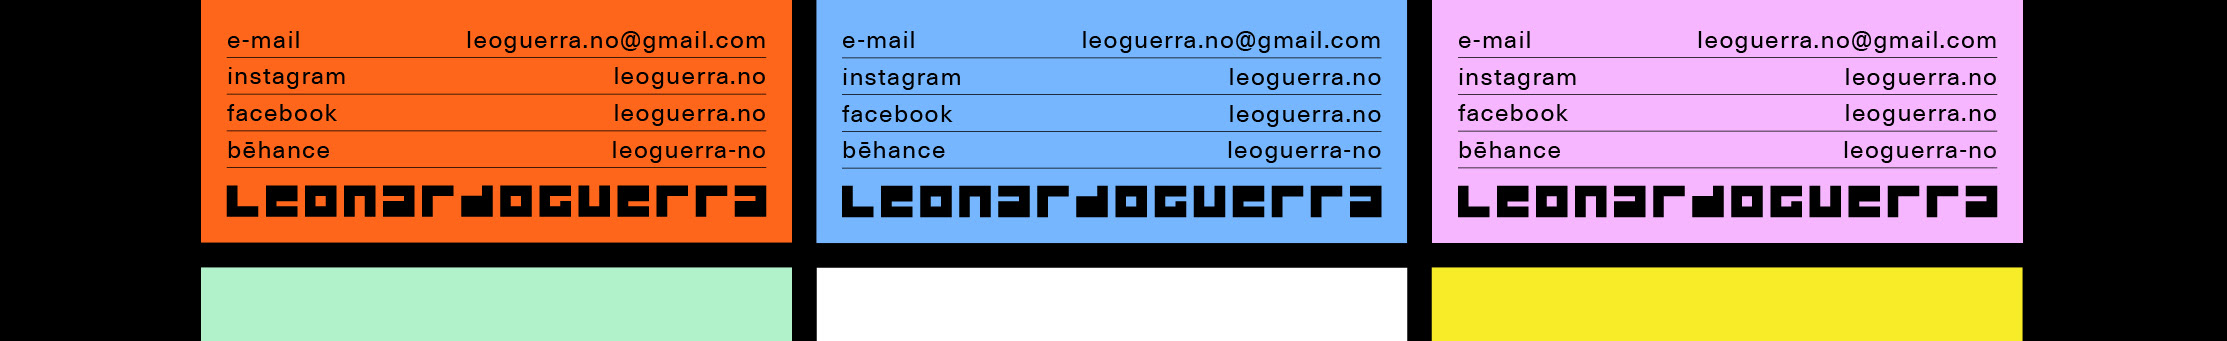 Baner profilu użytkownika leonardo guerra